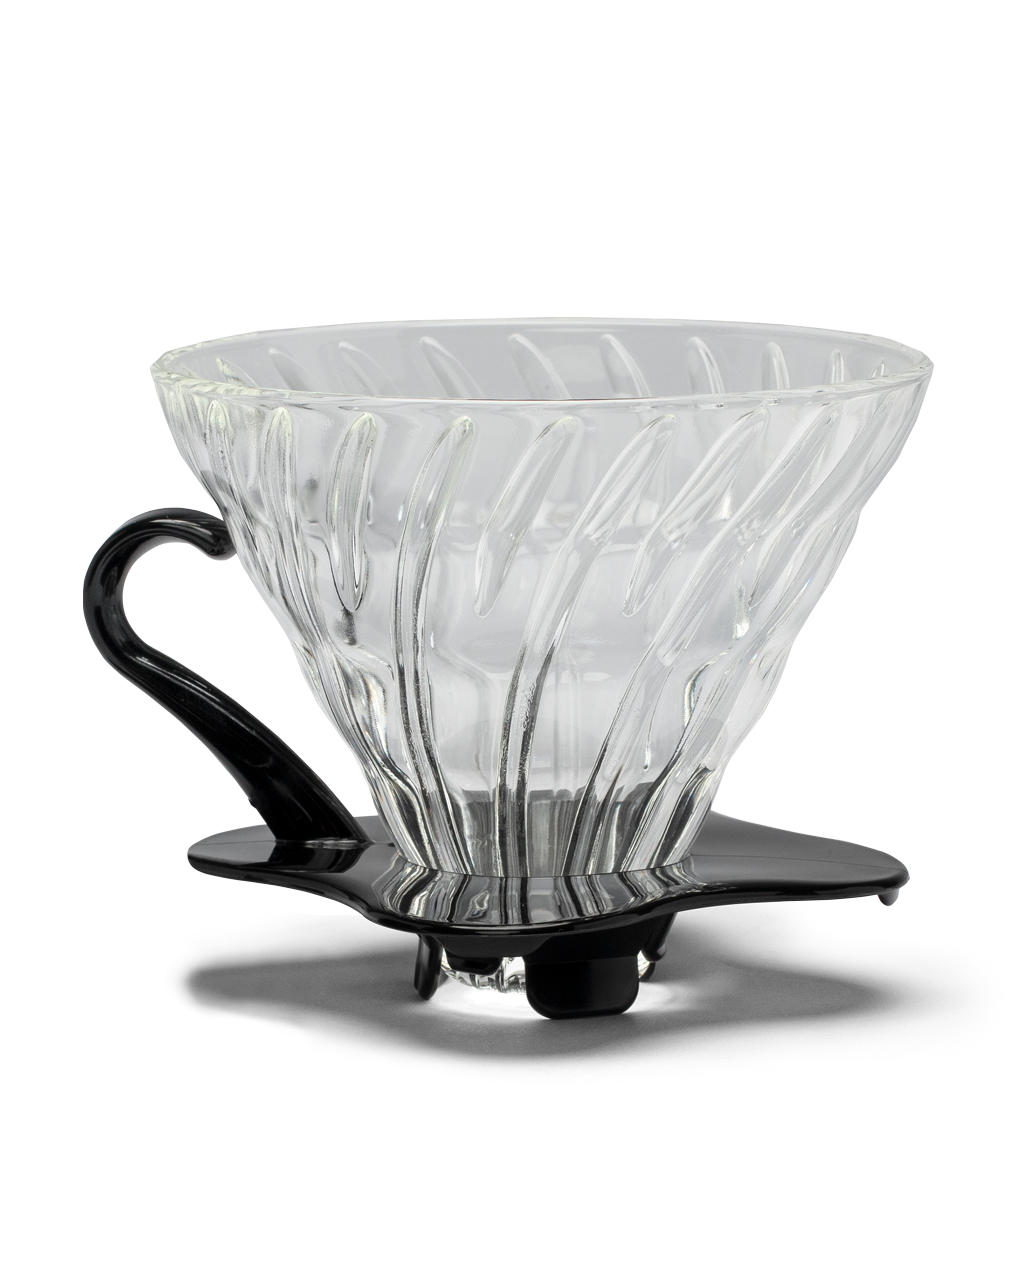  Hario V60 Glass Coffee Dripper, Size 02, Black : Home & Kitchen